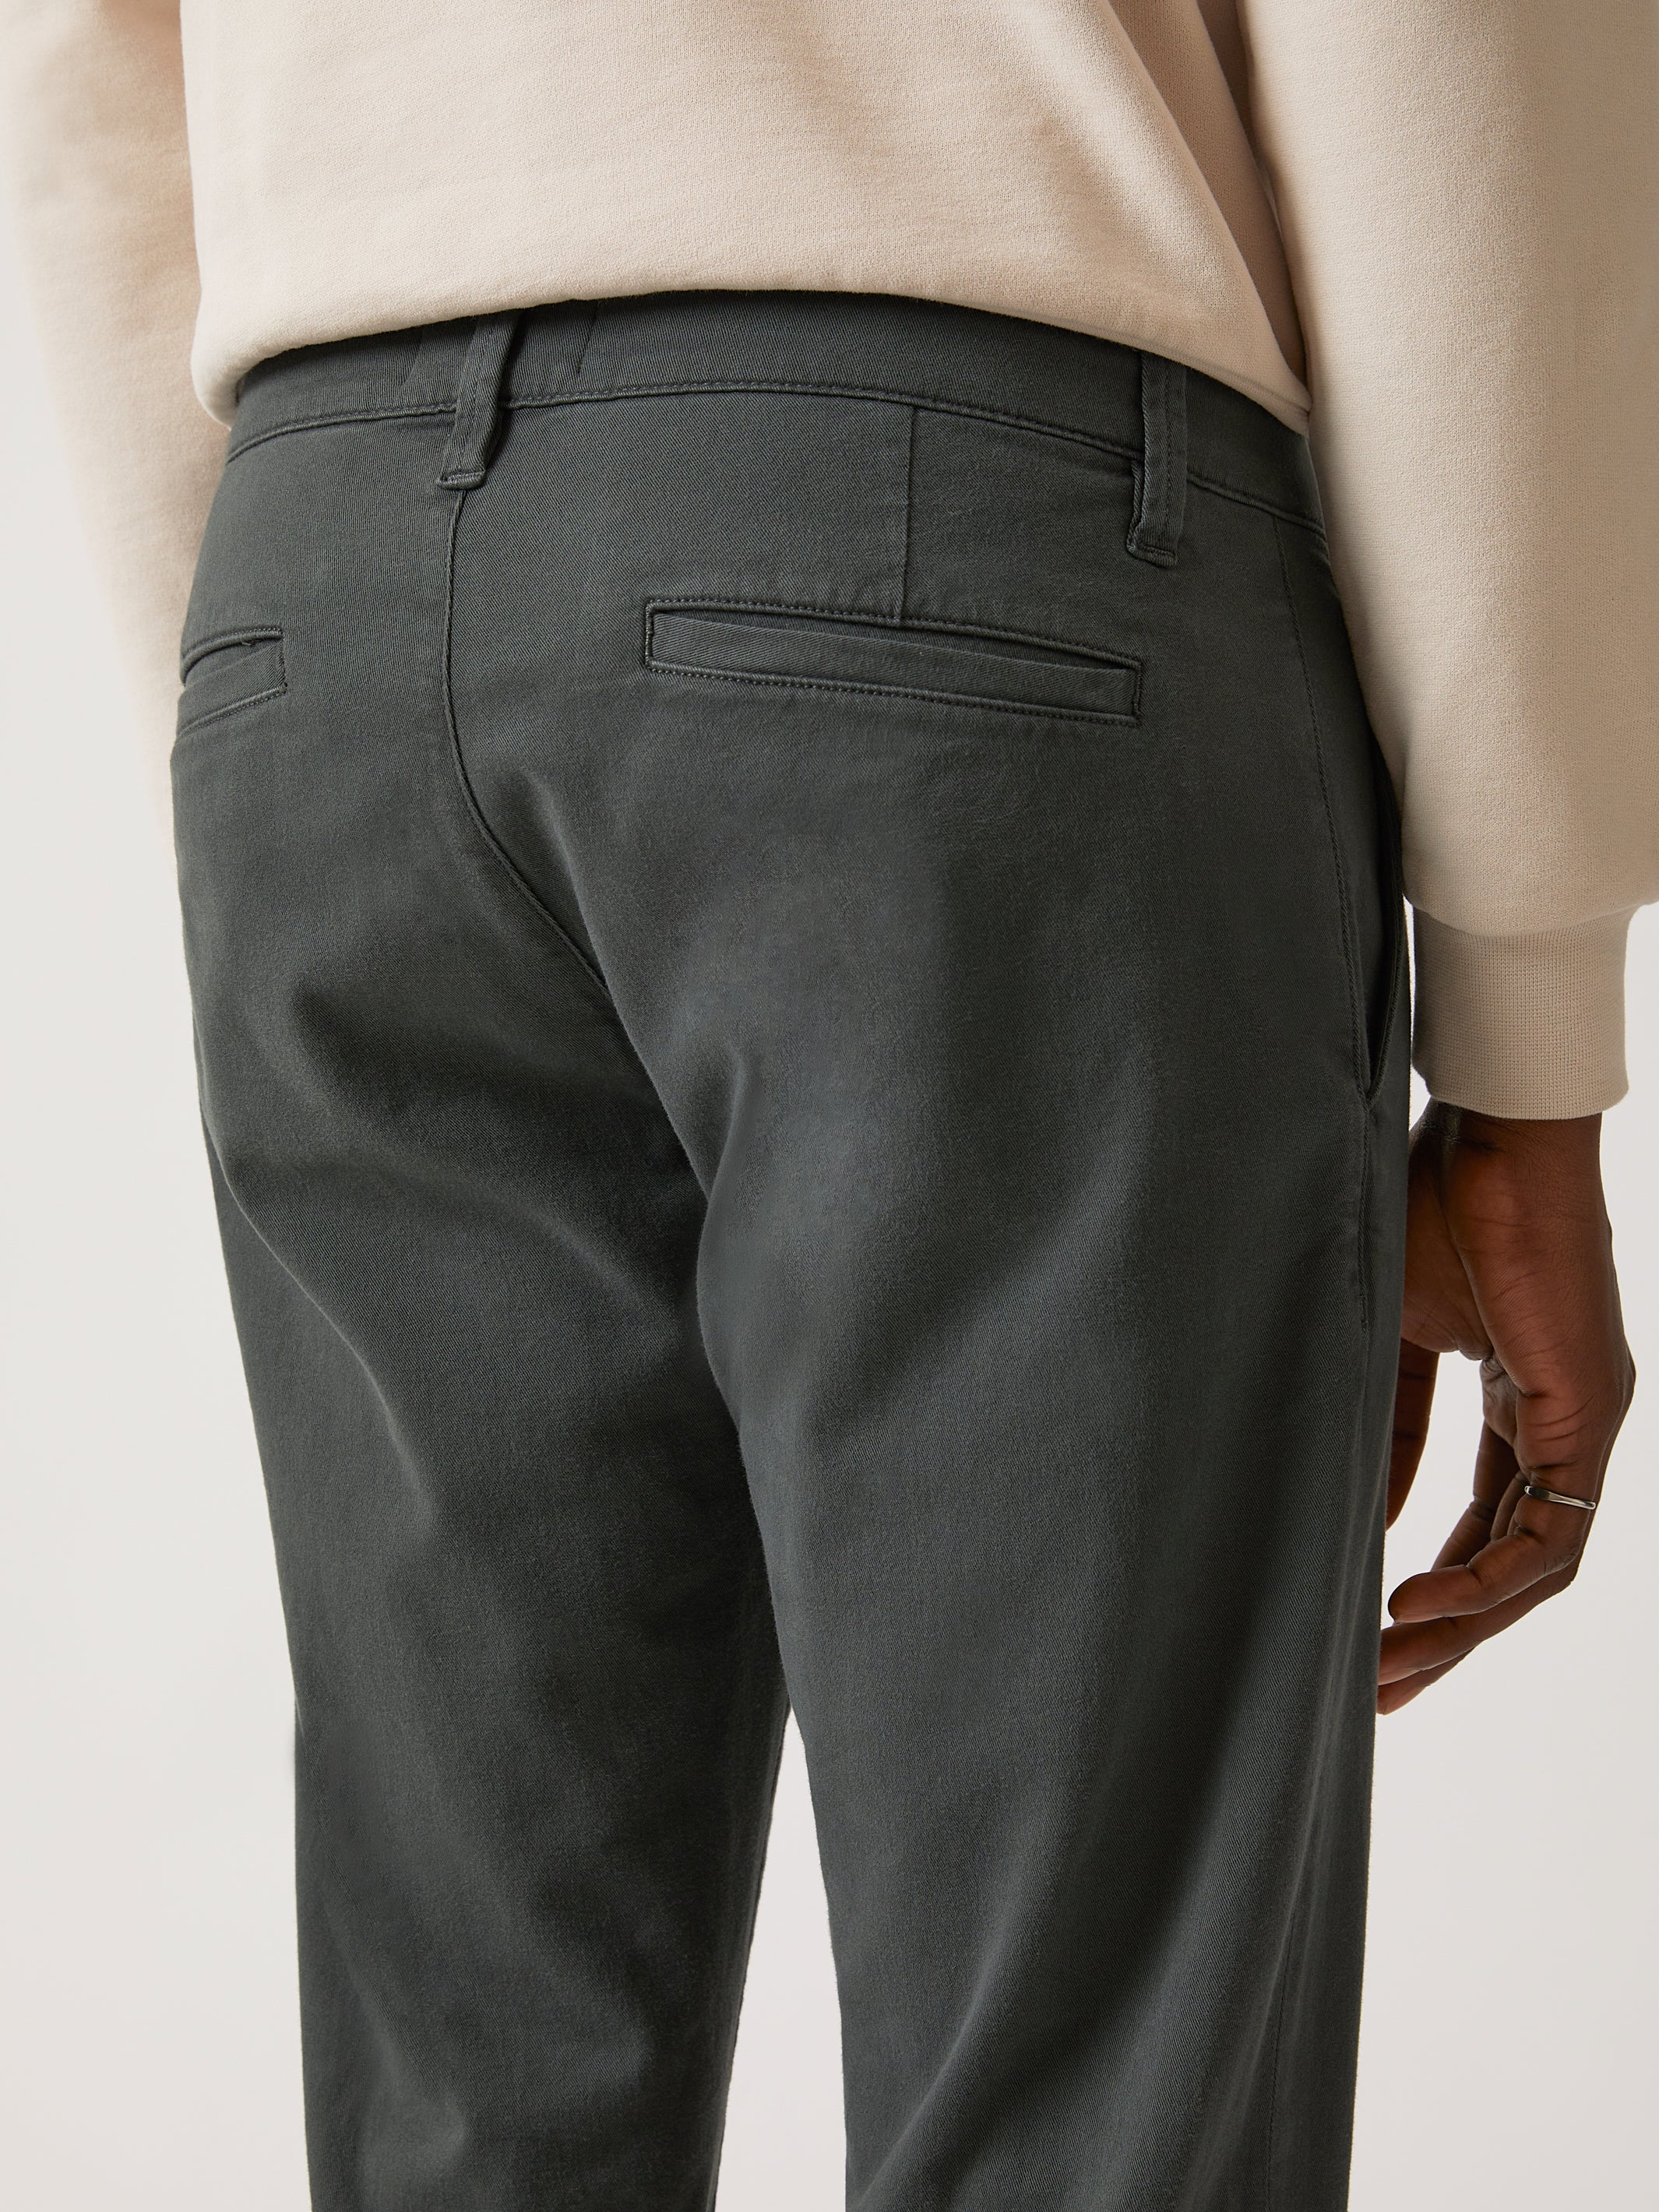 Men's Woven Pants in Asphalt - BROOKLYN INDUSTRIES